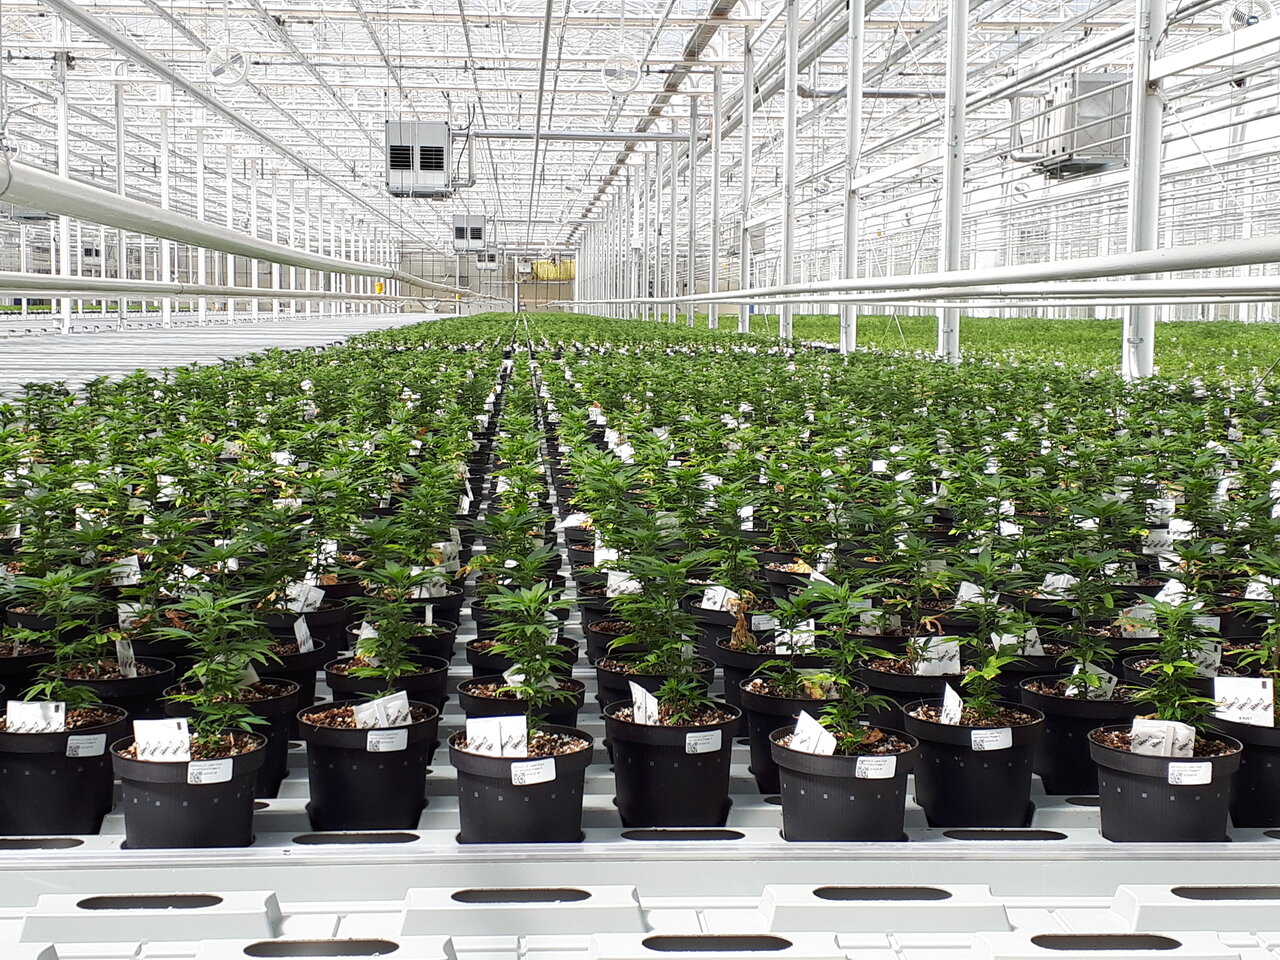 Greenhouse cannabis